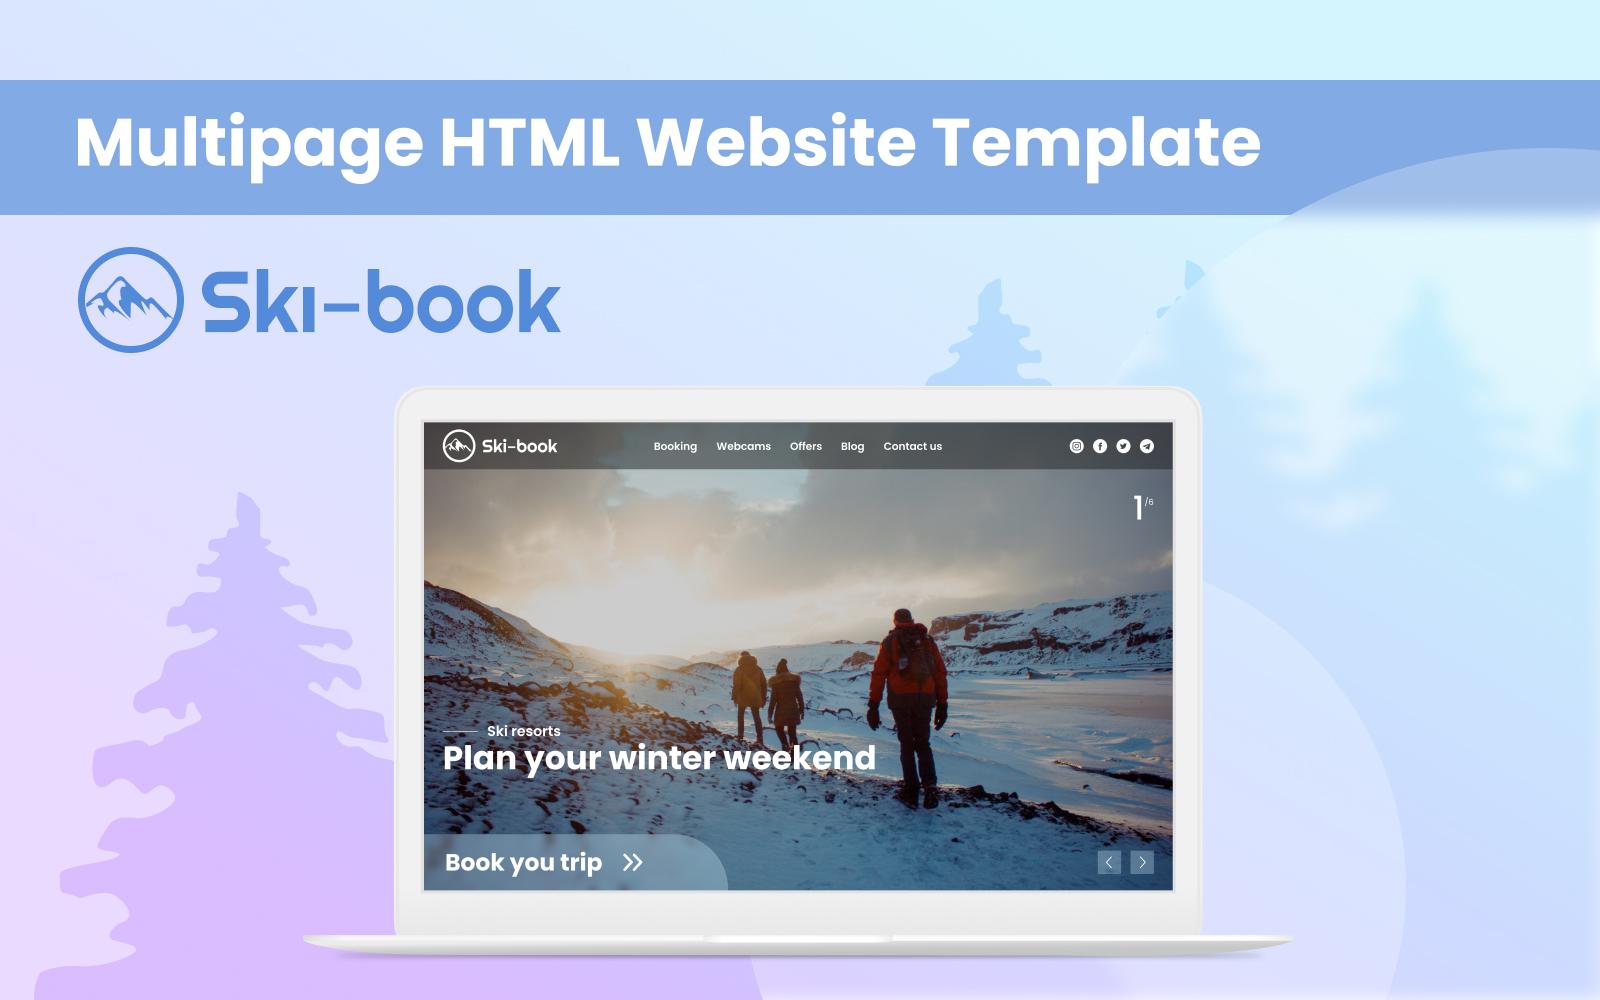 Ski-book — Ski Multipurpose HTML Website Template